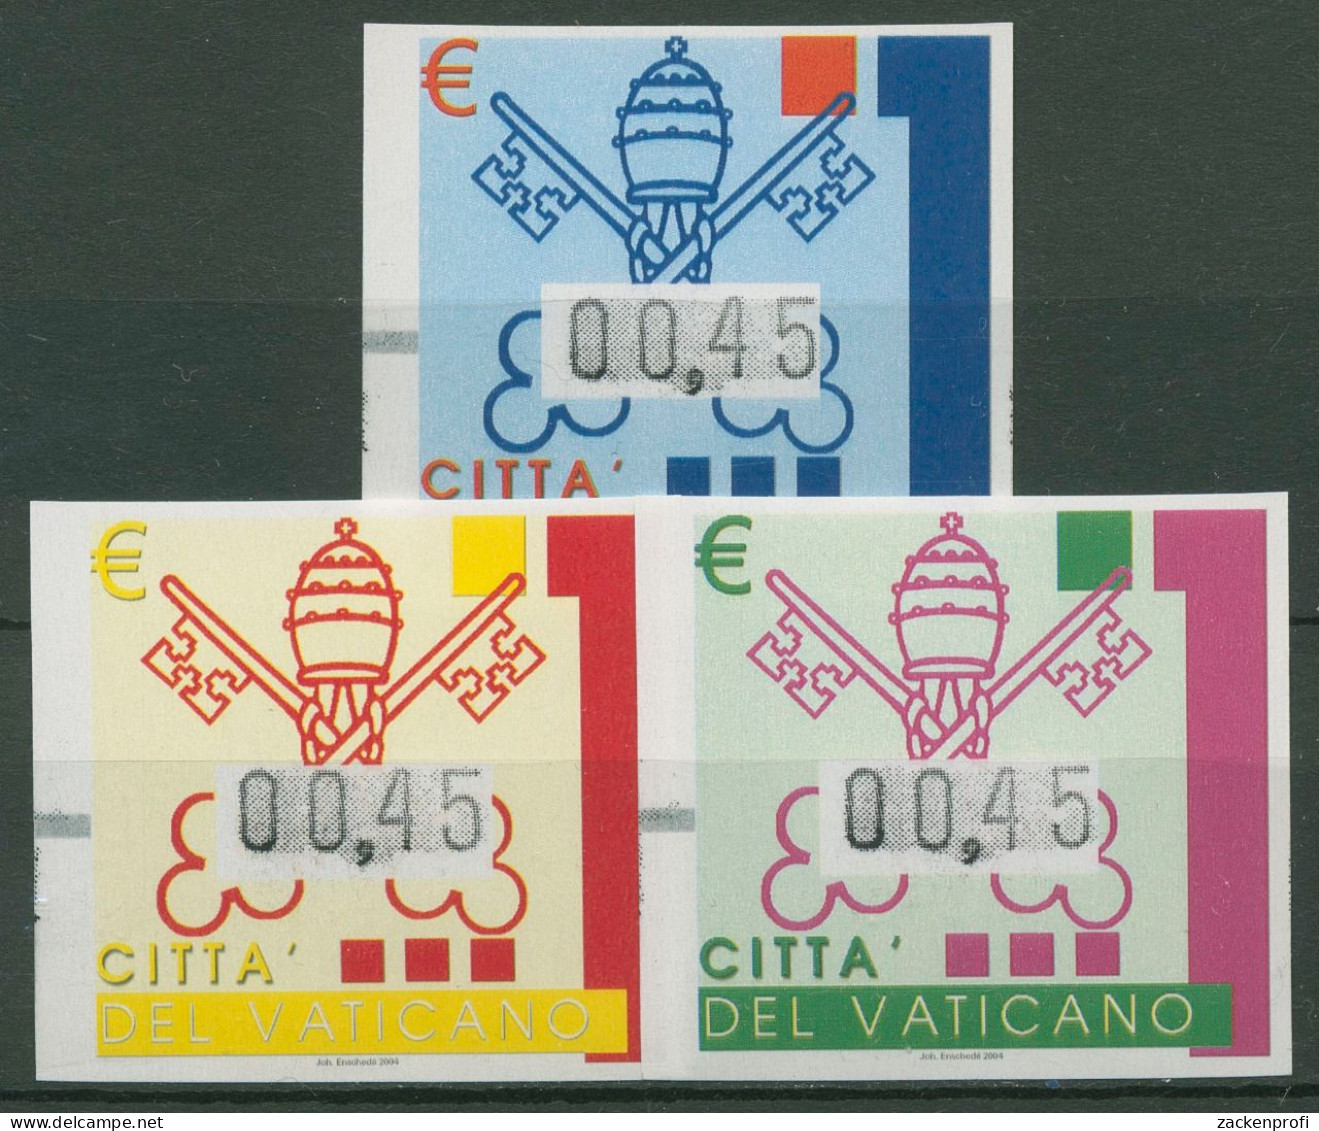 Vatikan 2004 Automatenmarken Wappen ATM 15/17 Postfrisch - Unused Stamps